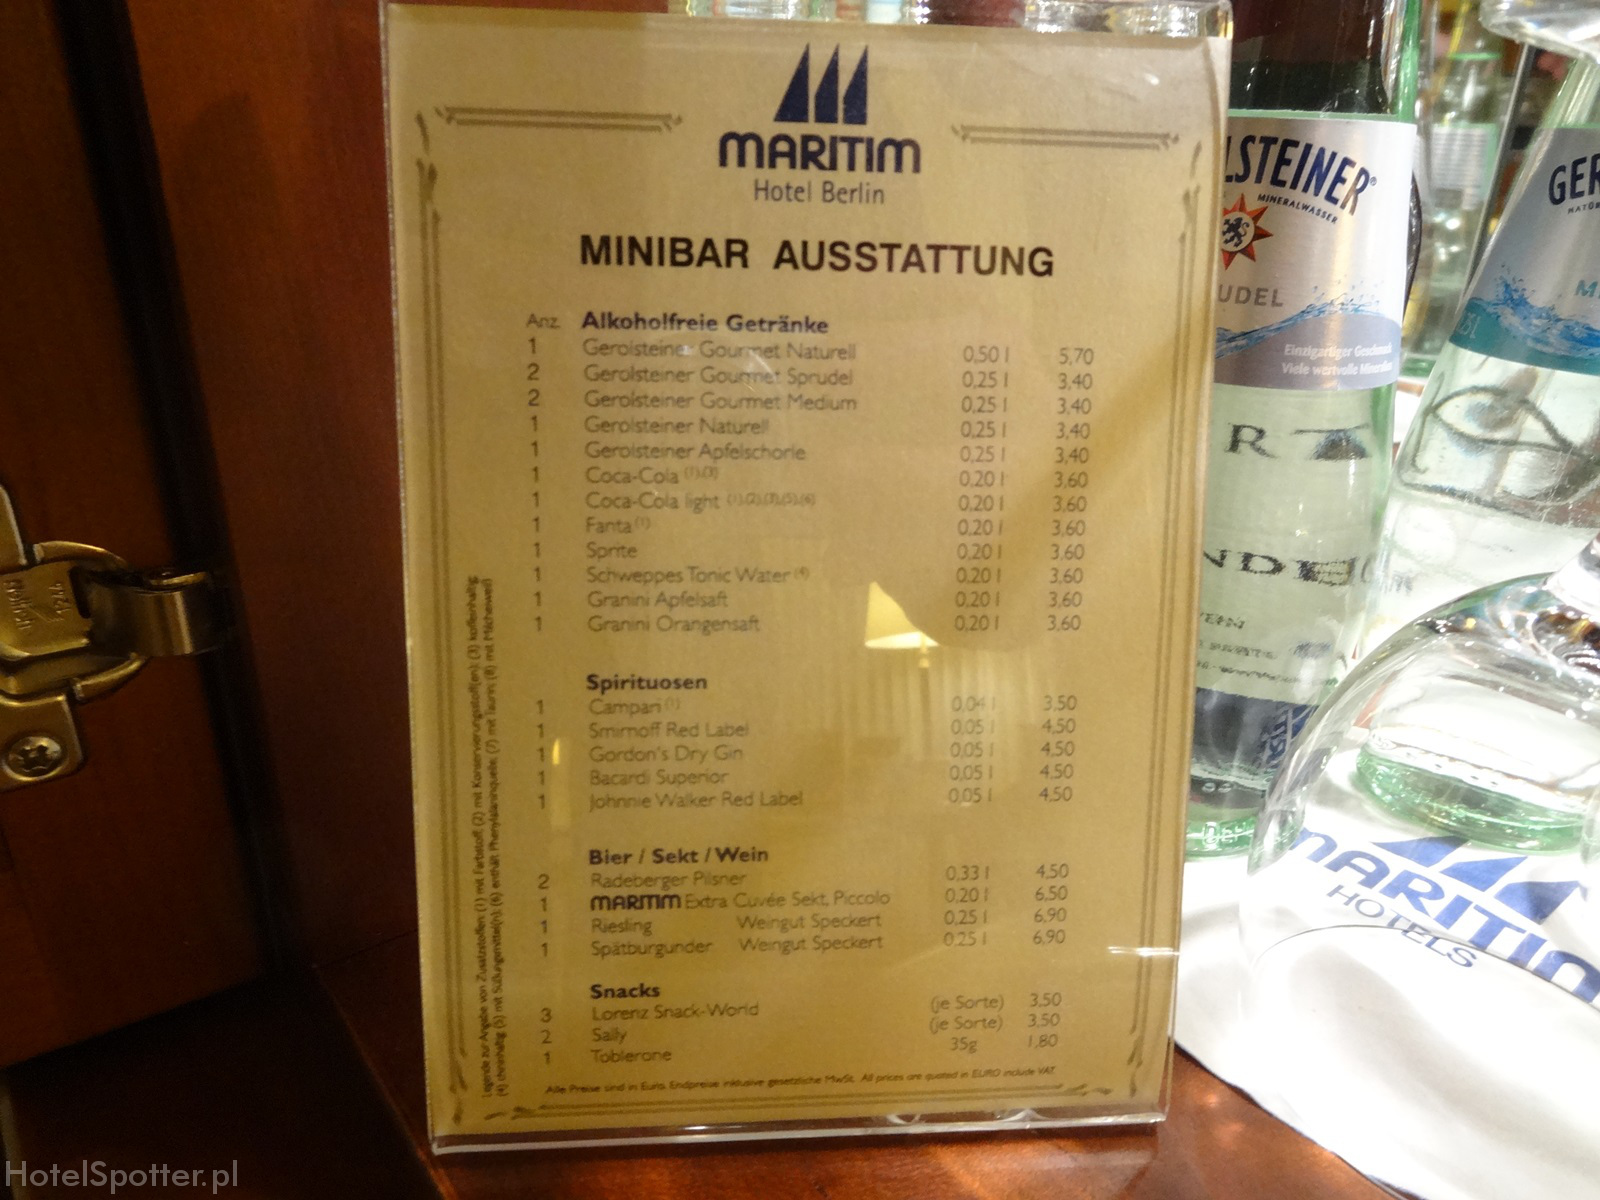 Maritim Hotel Berlin - ceny minibar prices